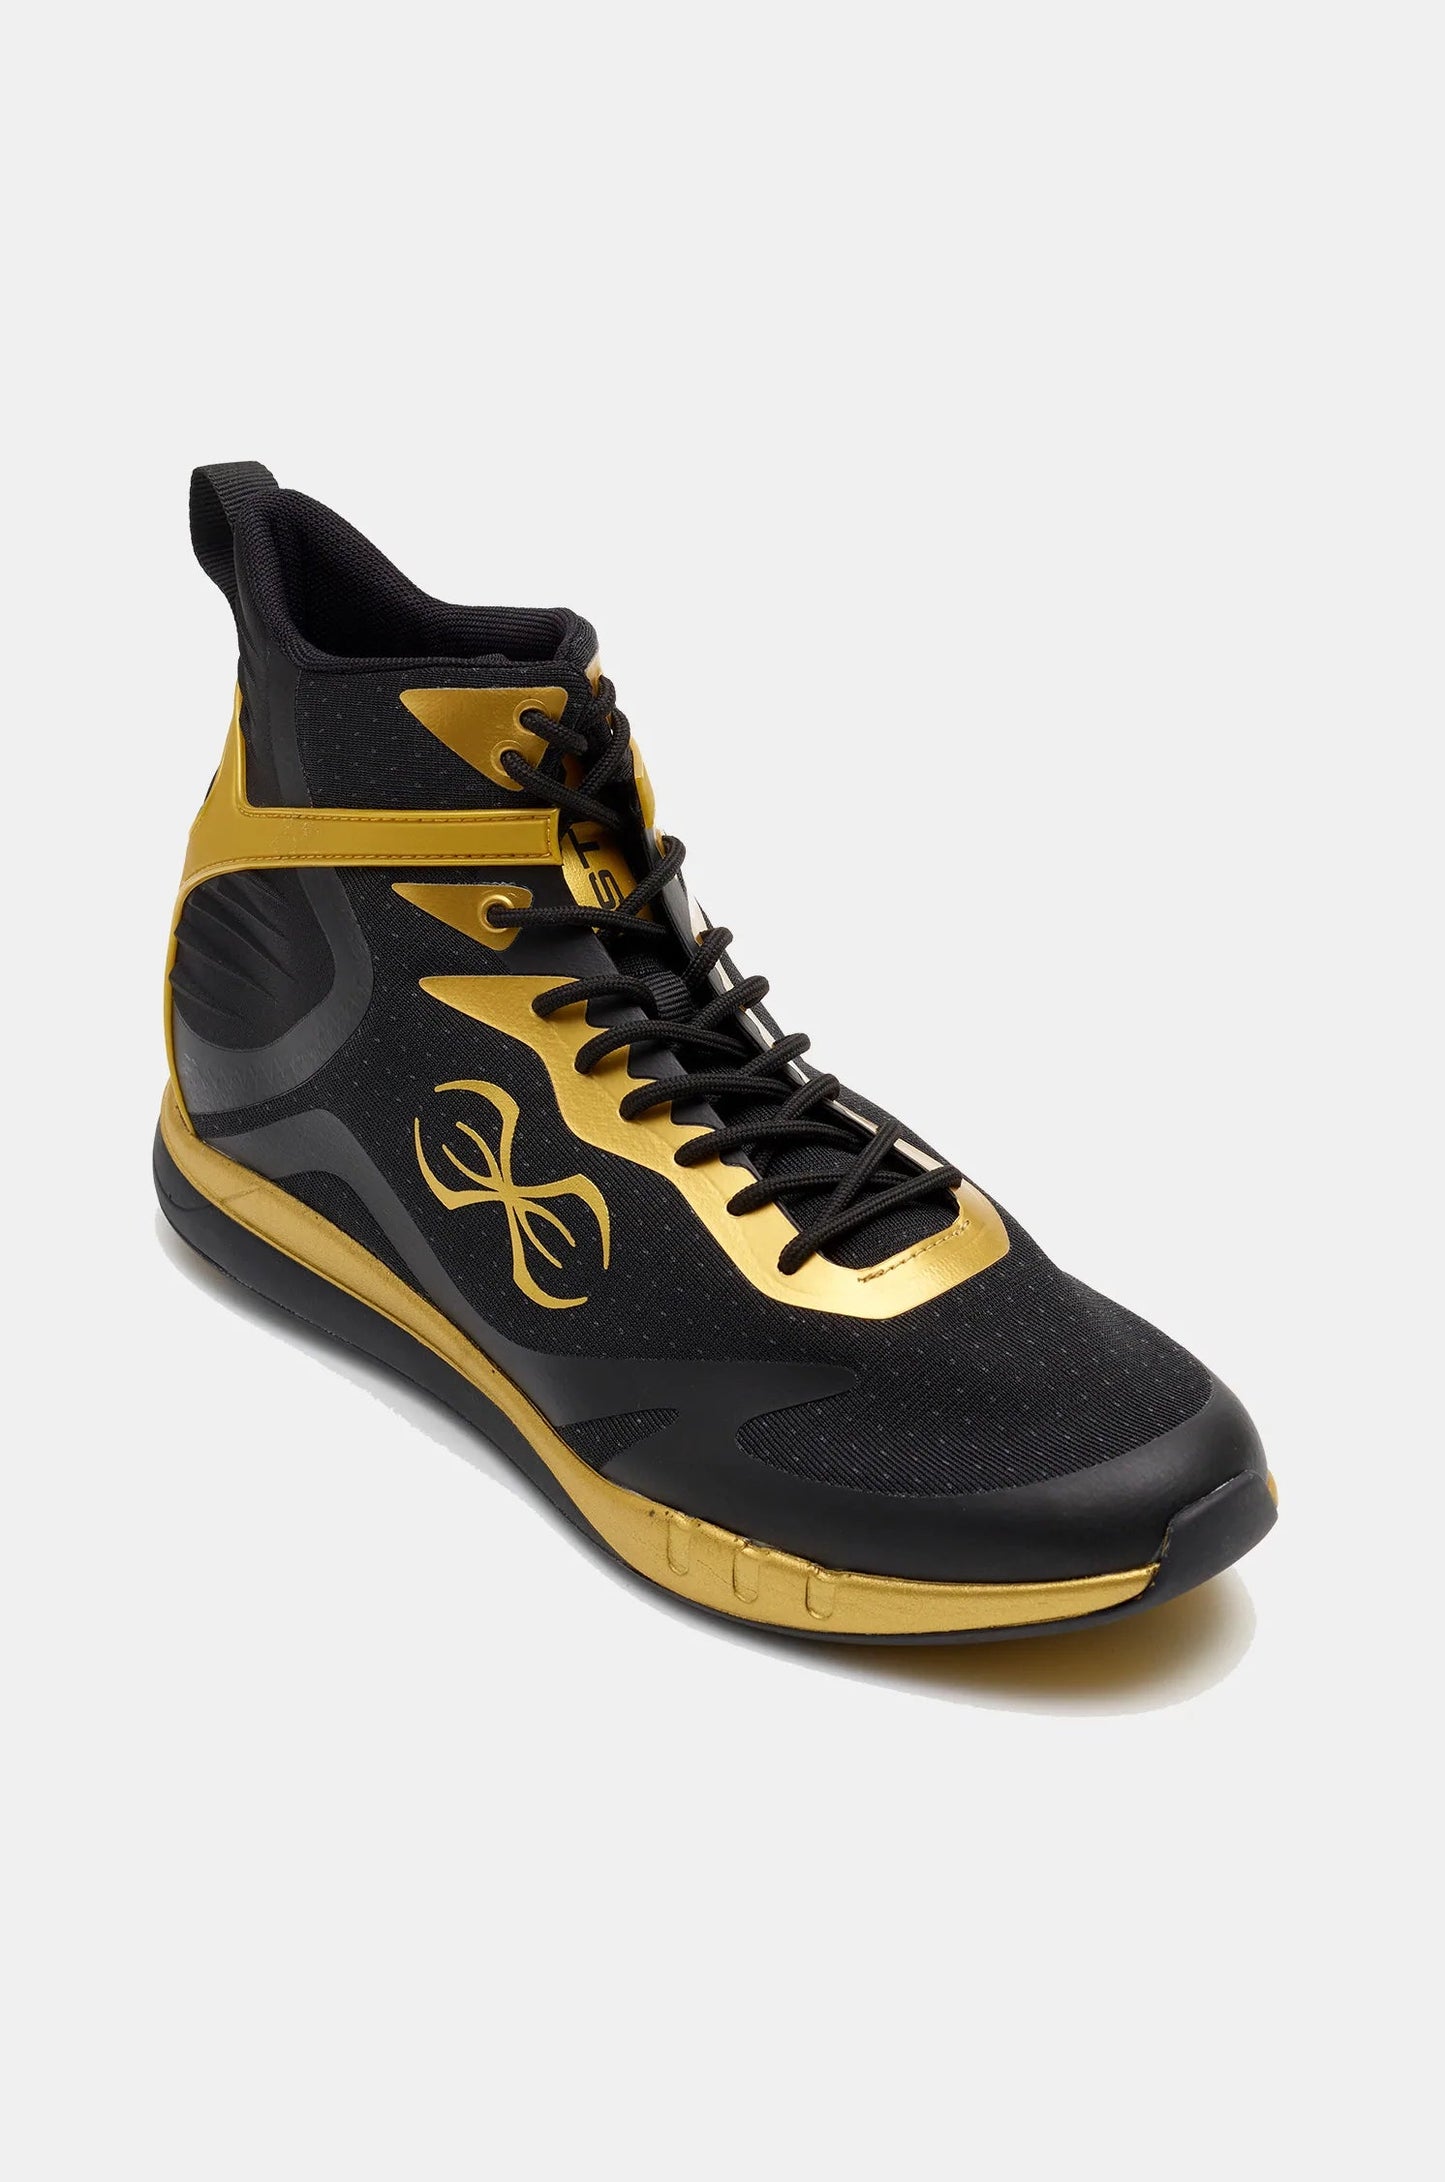 Sting Viper Boxing Shoes 2.0 - Multiple Colours